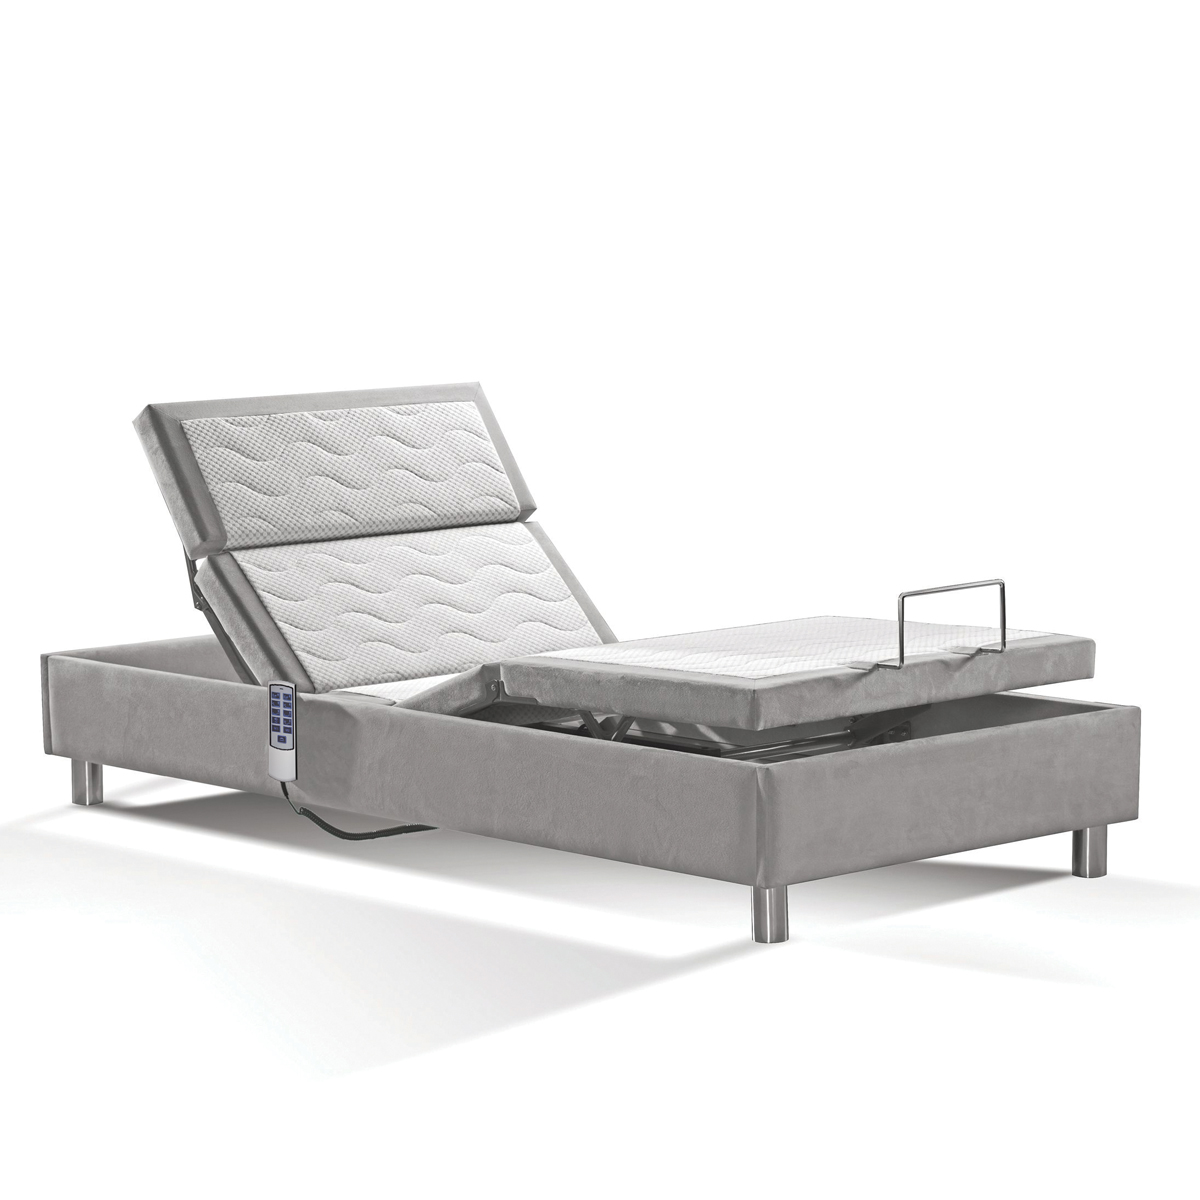 Articulated Bed Base Colunex Lust L